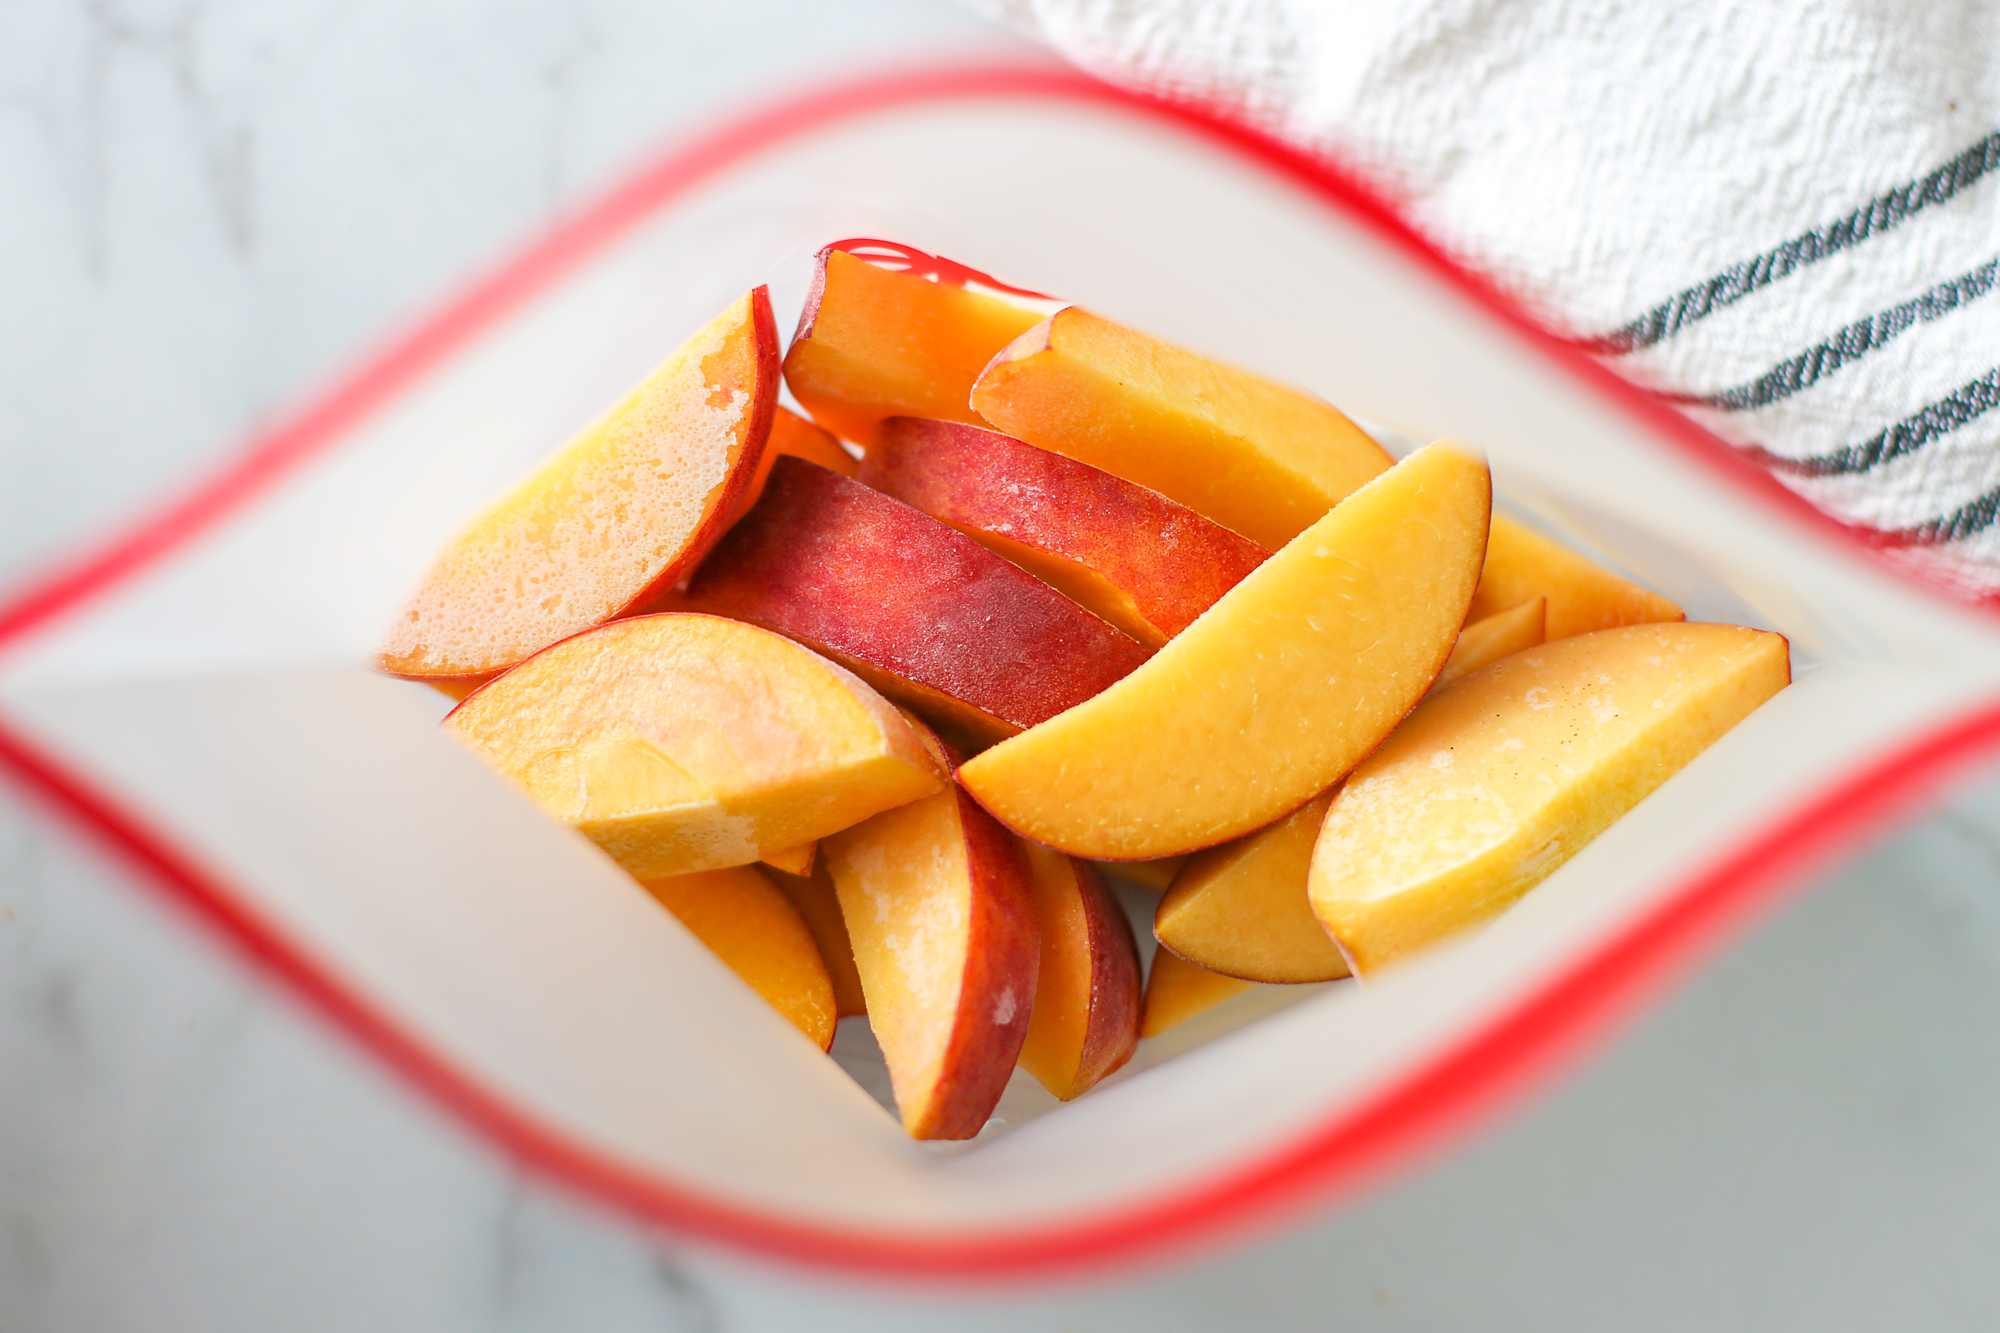 Frozen sliced peaches in a reusable freezer bag.